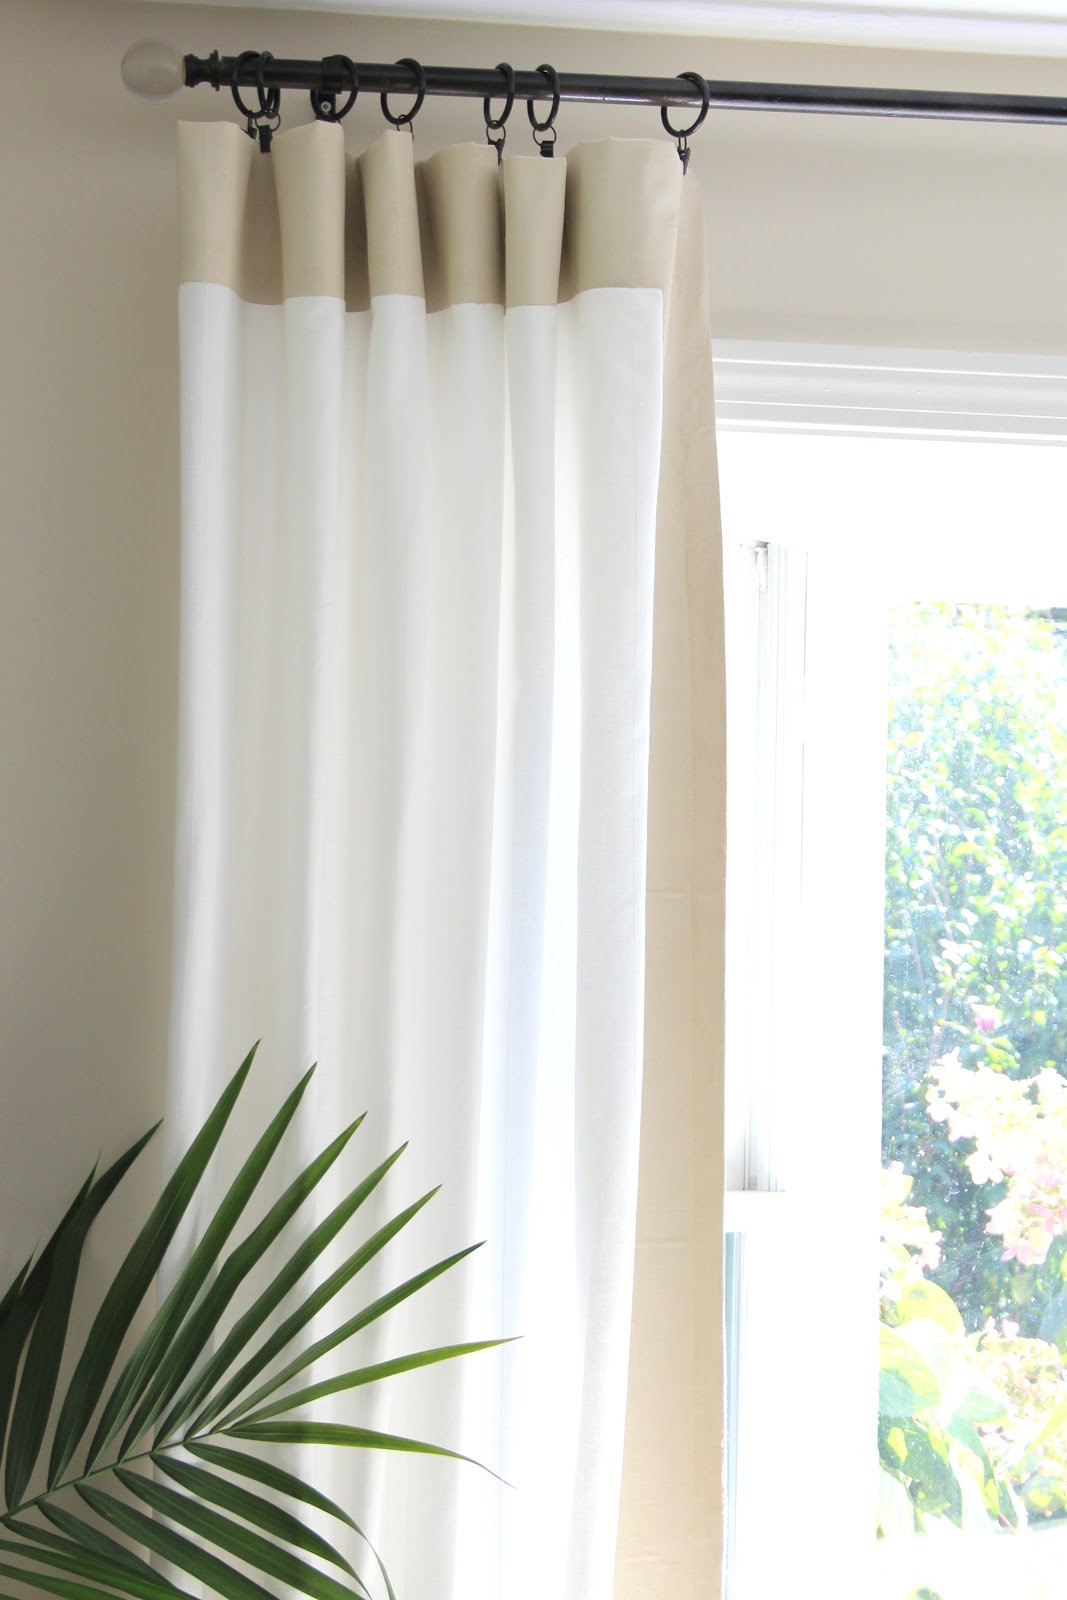 DIY Curtain Brackets
 DIY Curtain Rods Shine Your Light